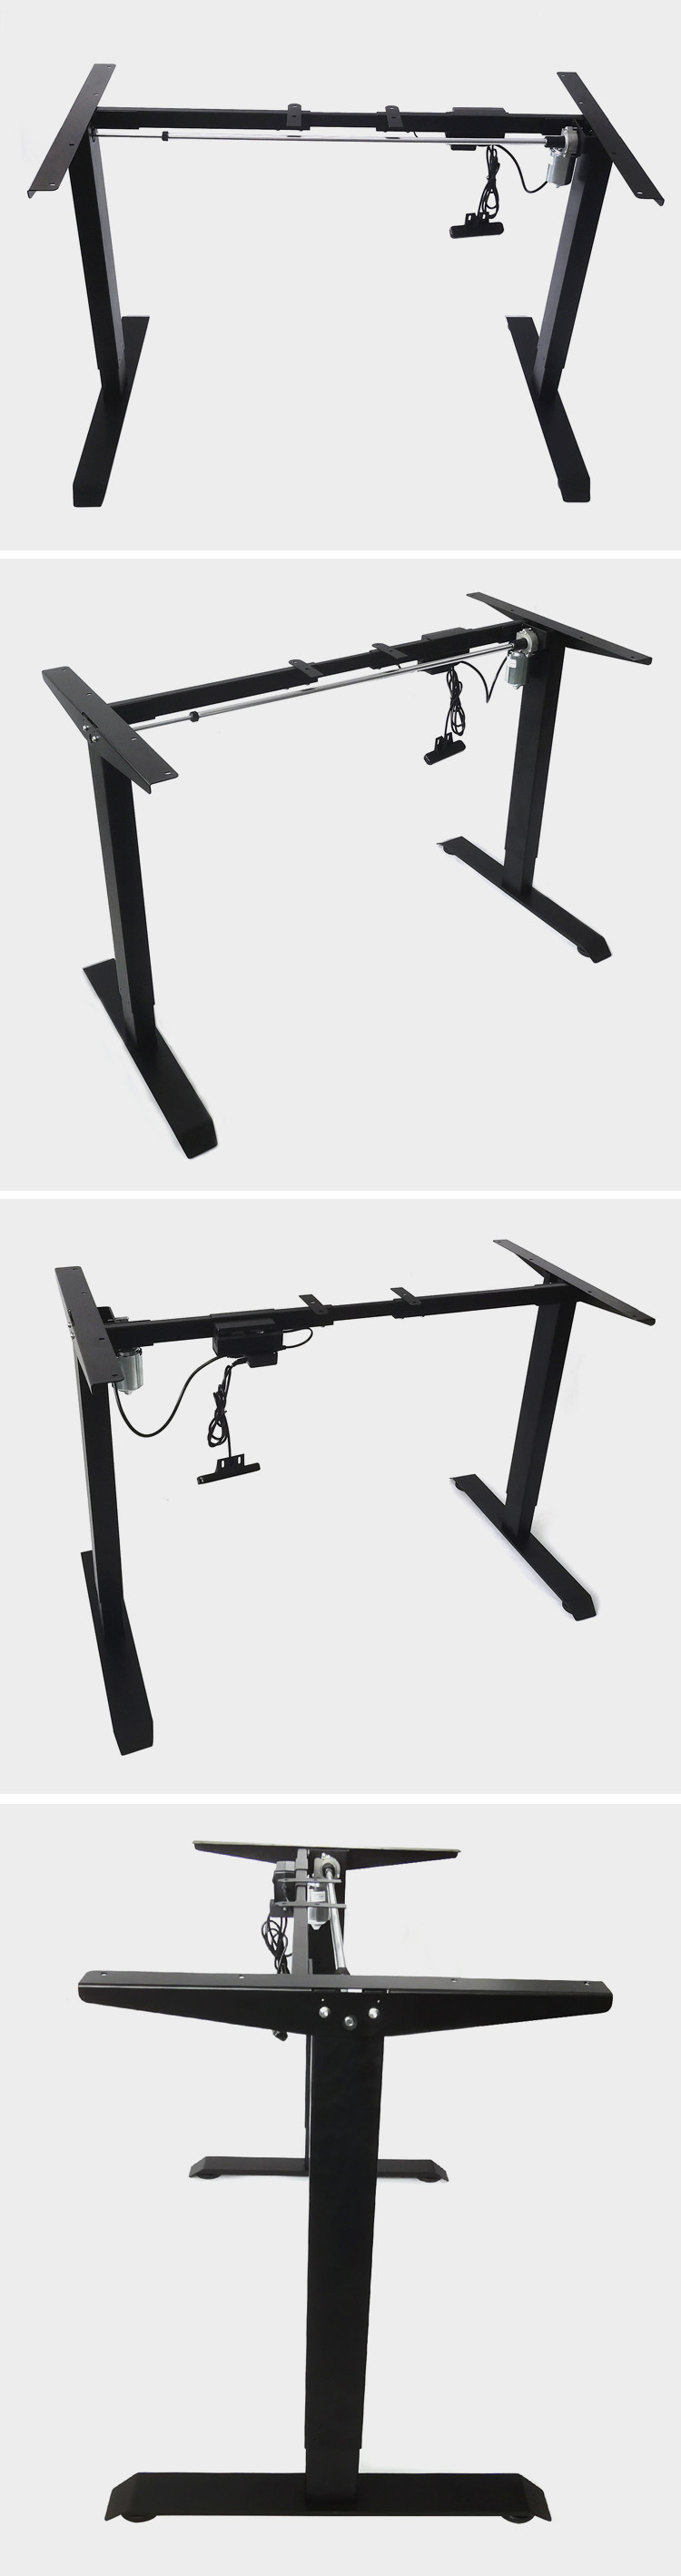 Automatic Healthy Single Motor Electric Sit Stand Desk Adjustable Desk Home Office Lift Desk